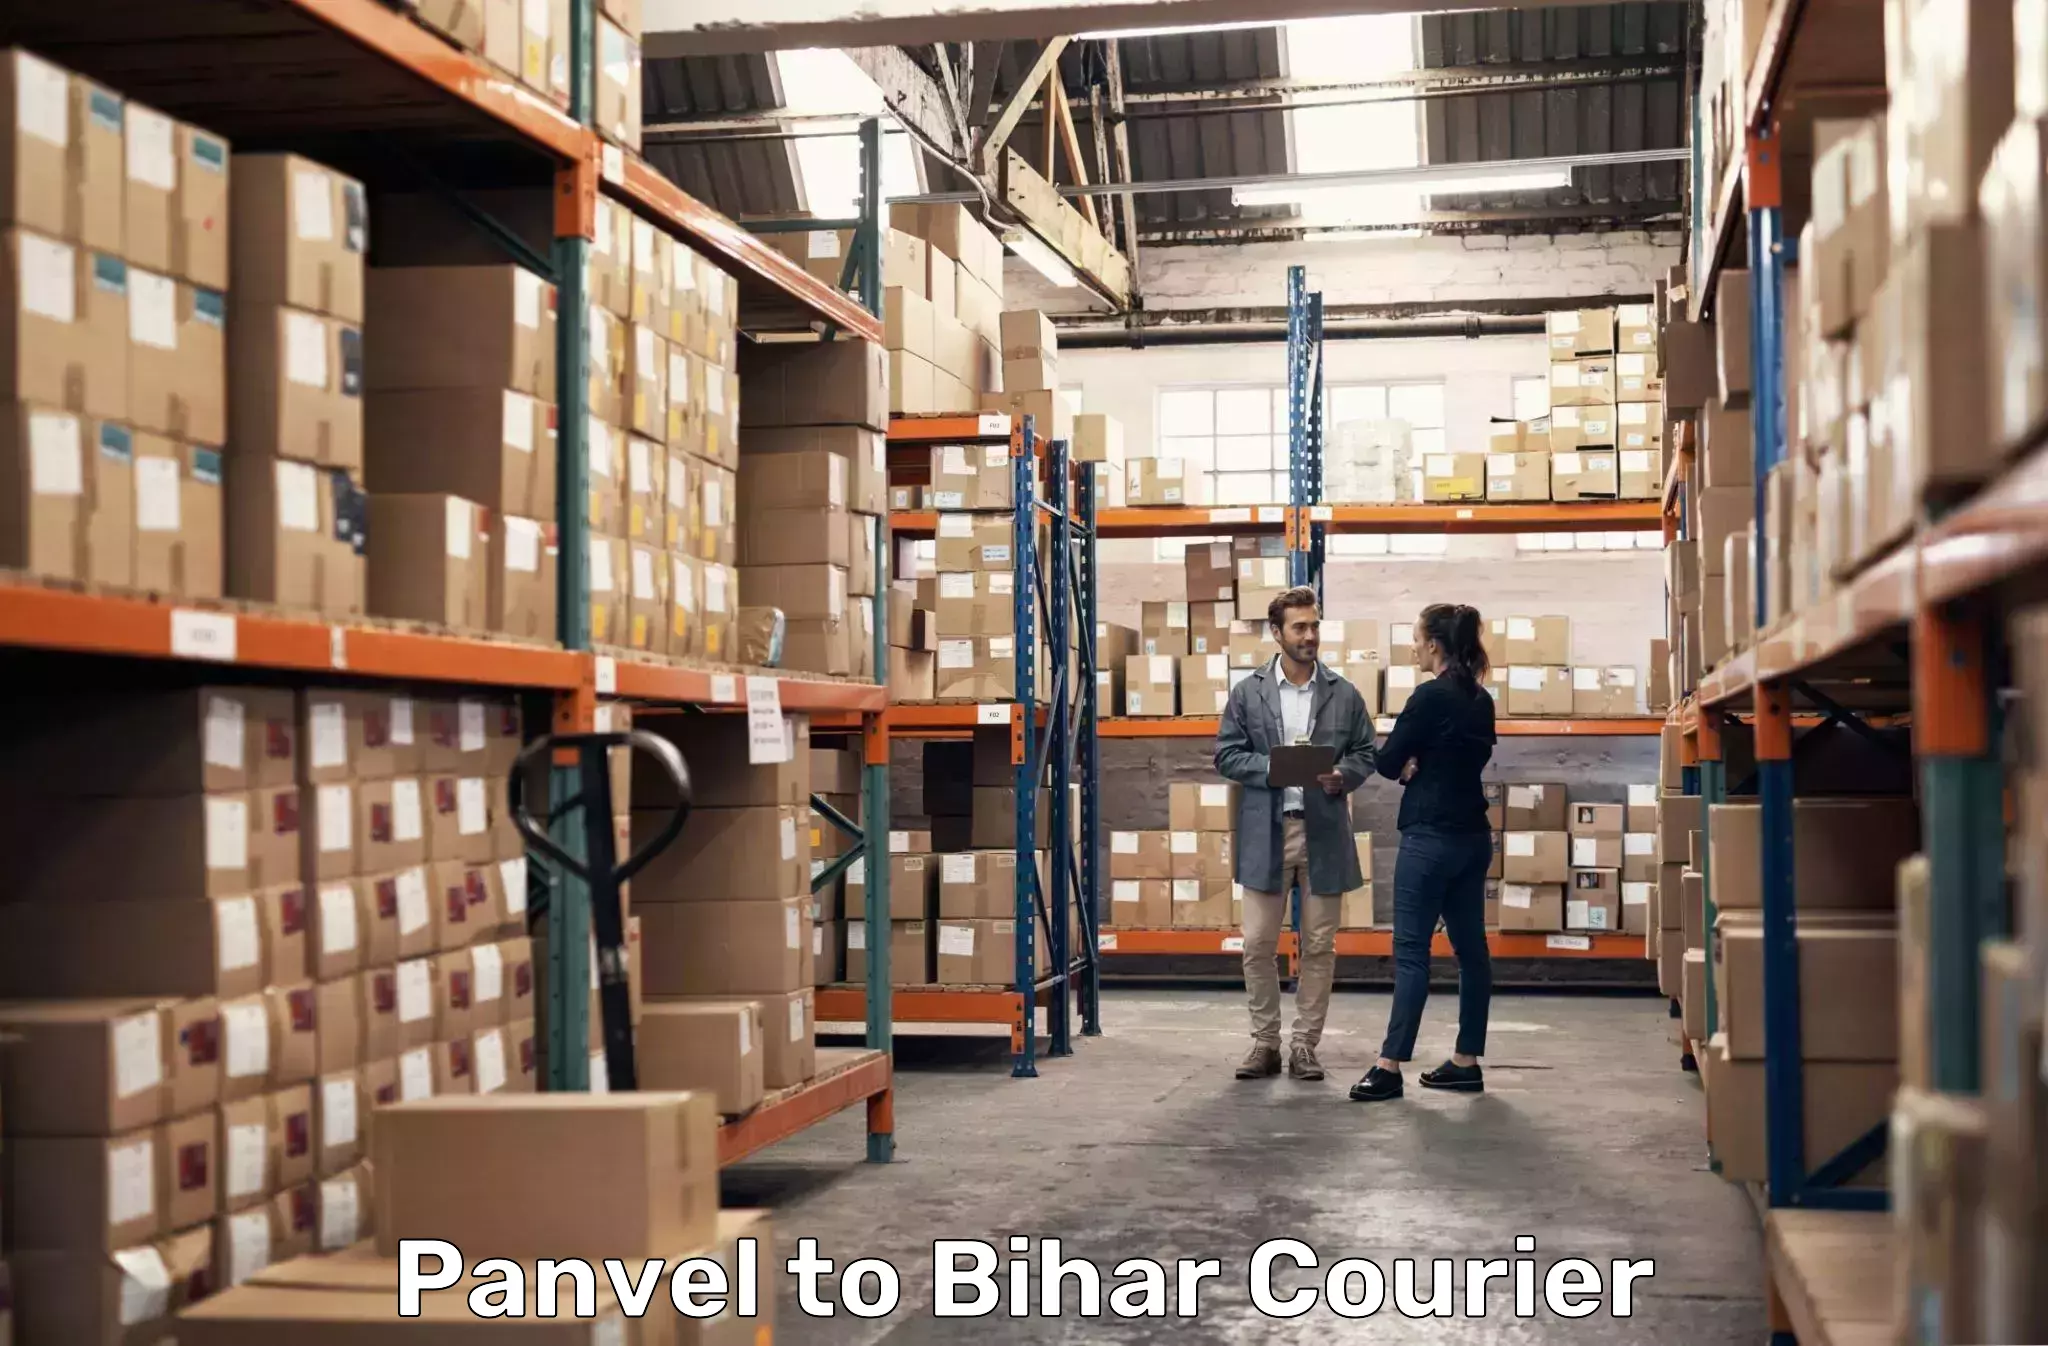 Delivery service partnership Panvel to Bihar